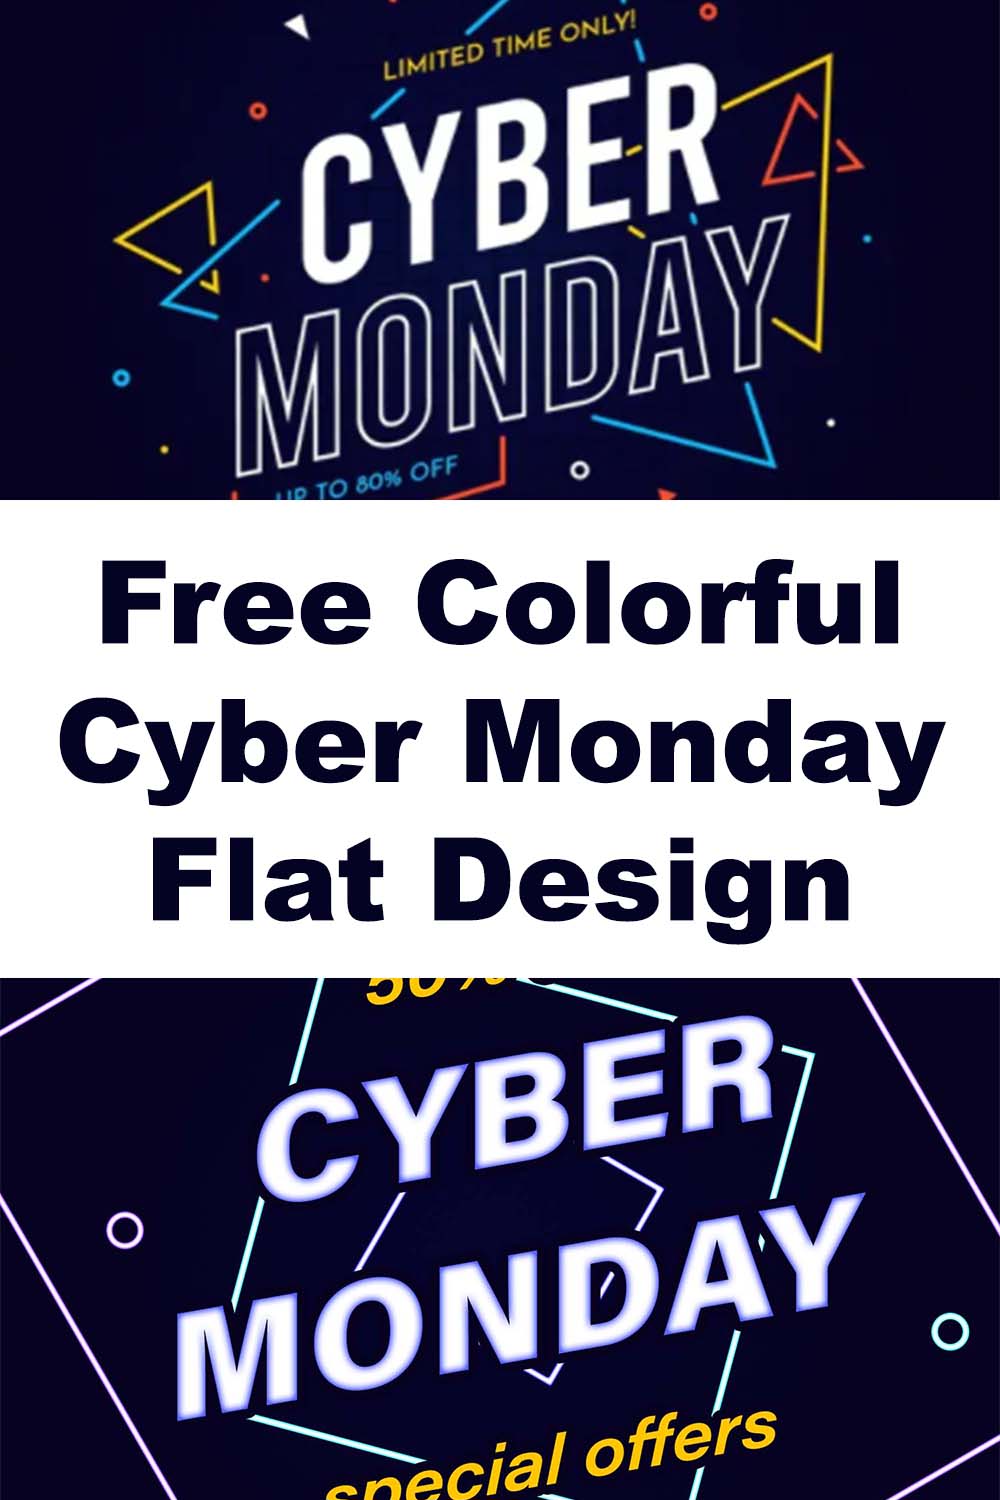 Free Colorful Cyber Monday Flat Design pinterest.